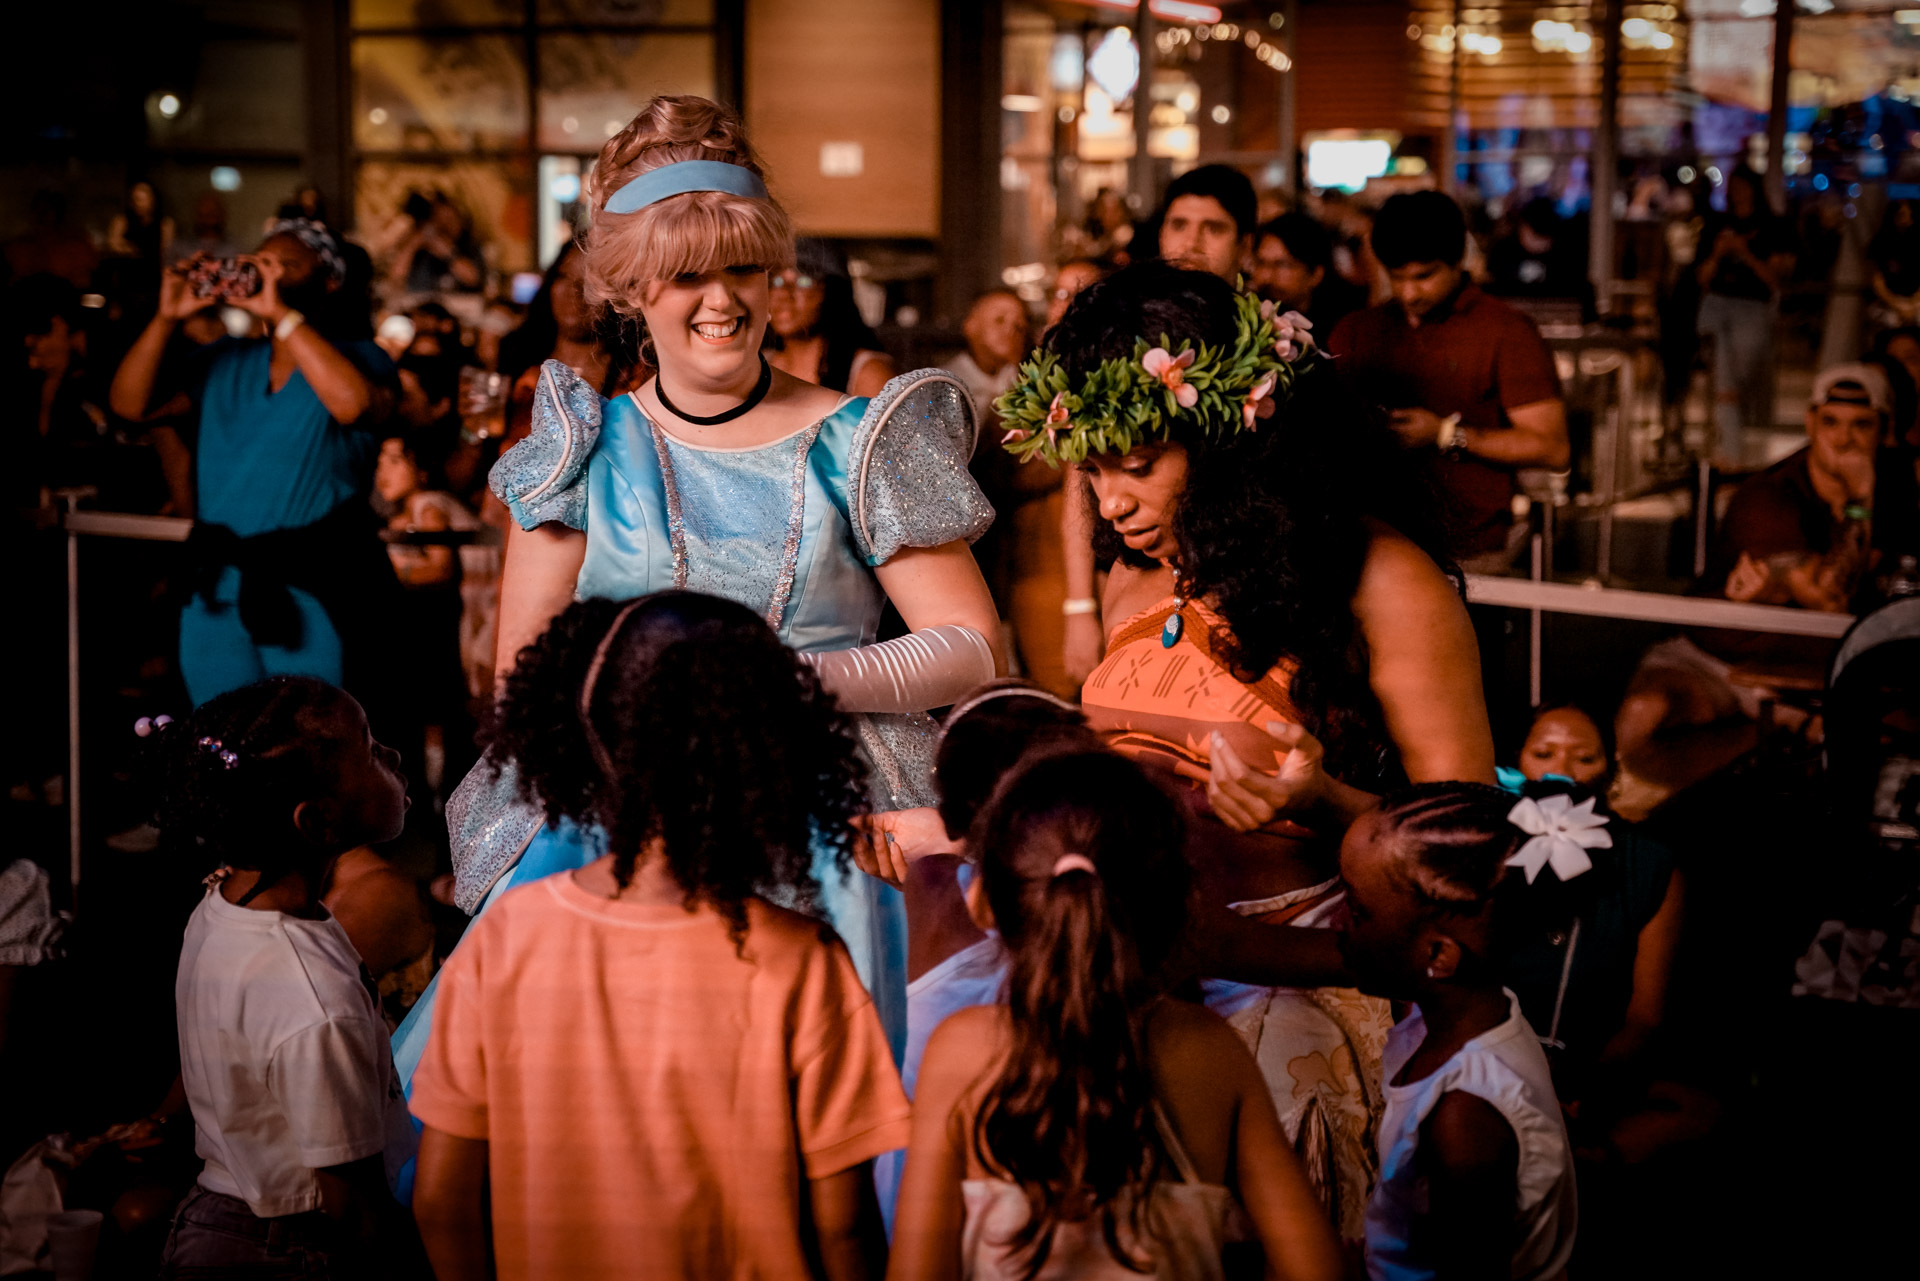 Kids gathered around two women dressed as Disney princesses